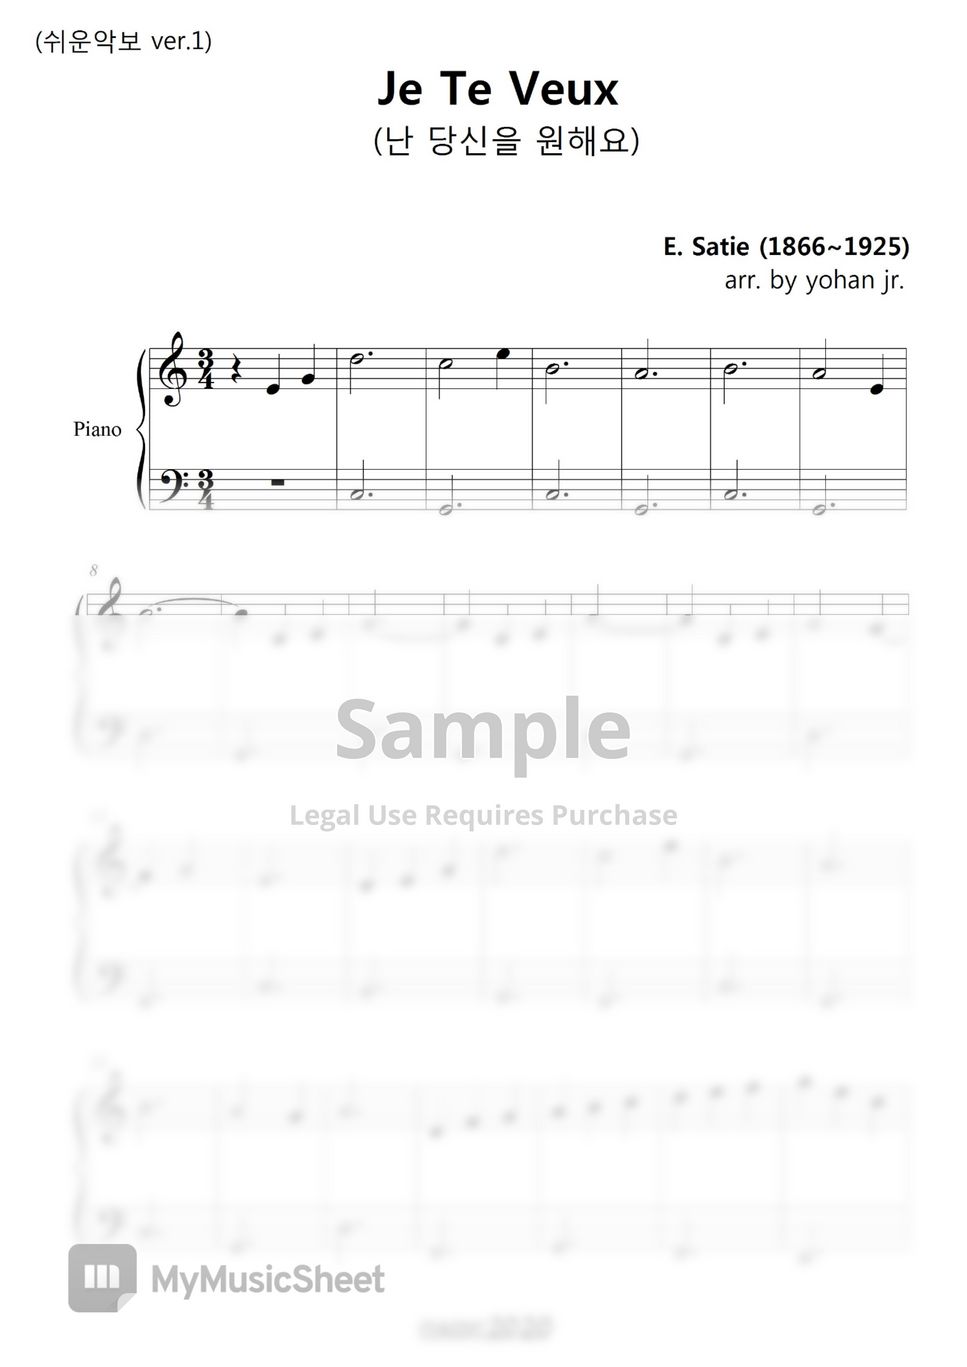 E. Satie - Je Te Veux (easy piano ver.1) by classic2020